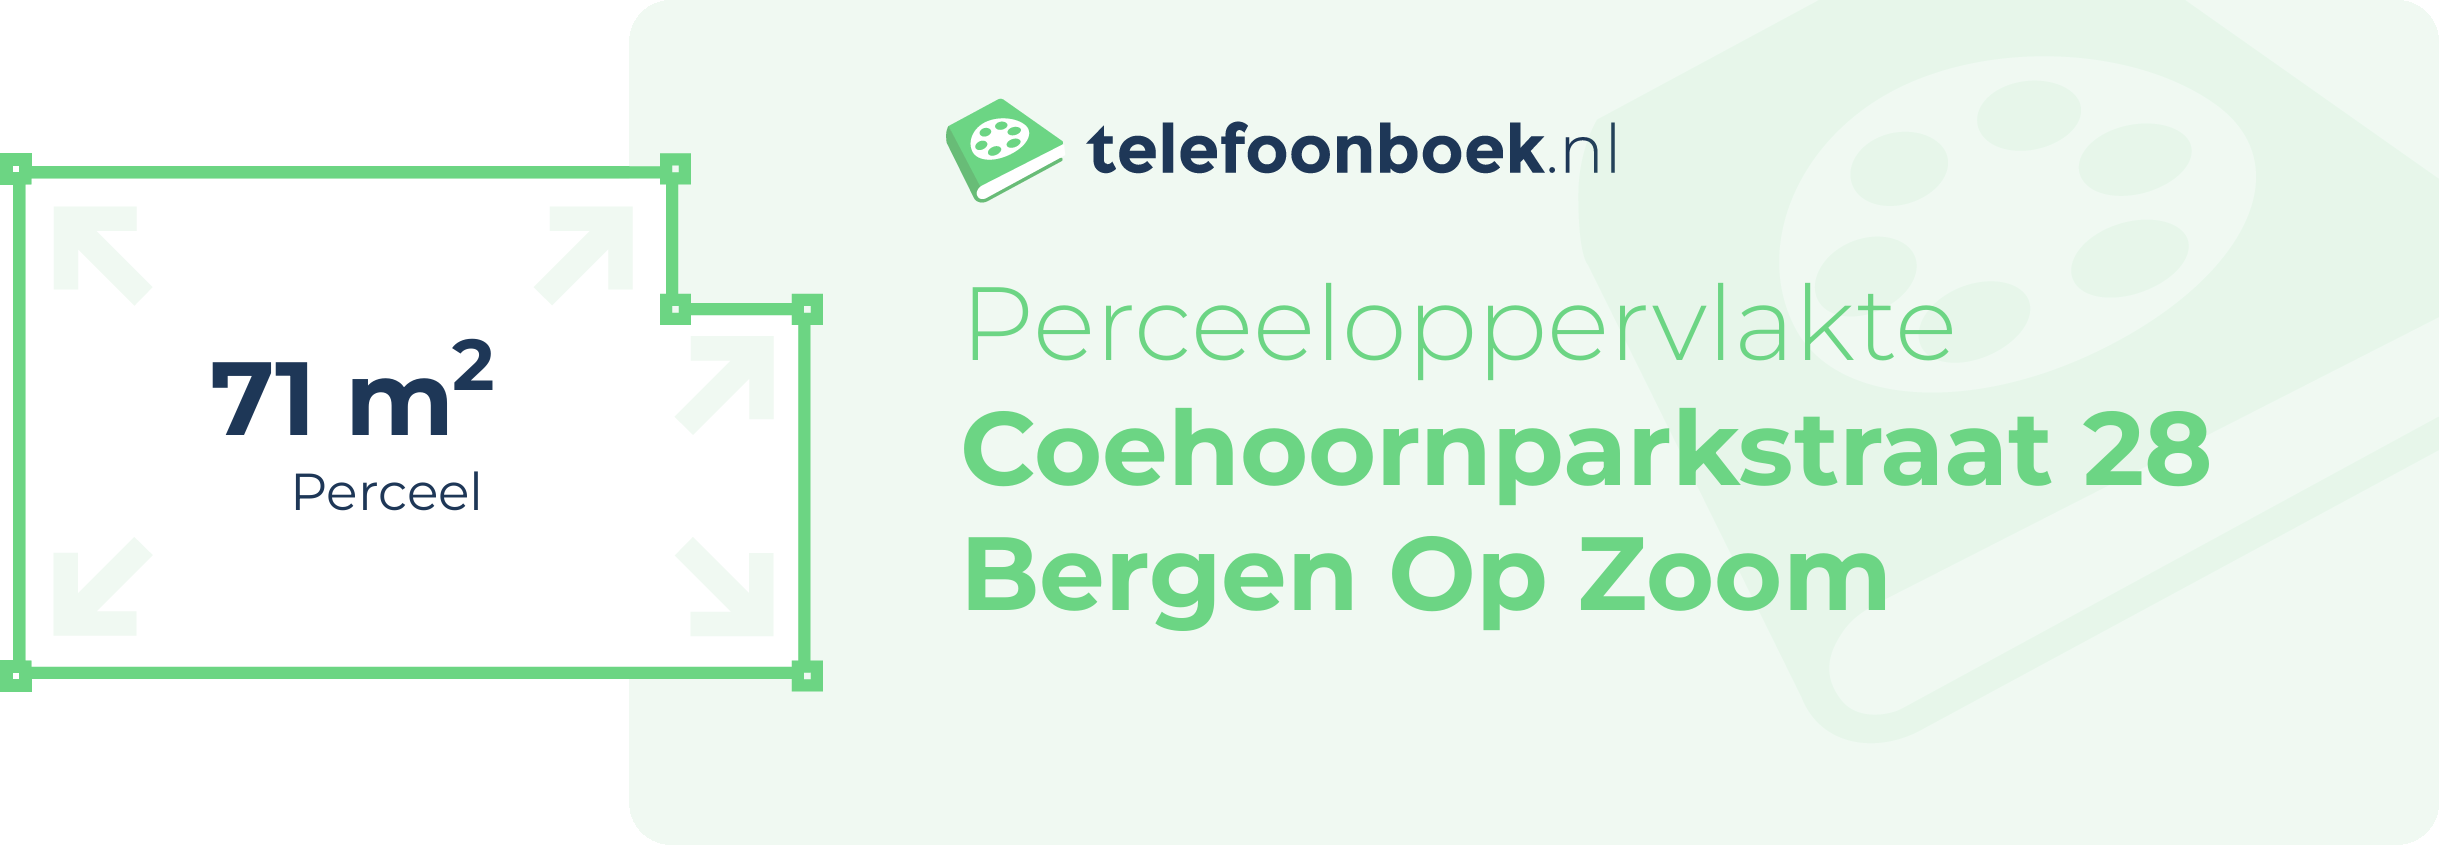 Perceeloppervlakte Coehoornparkstraat 28 Bergen Op Zoom